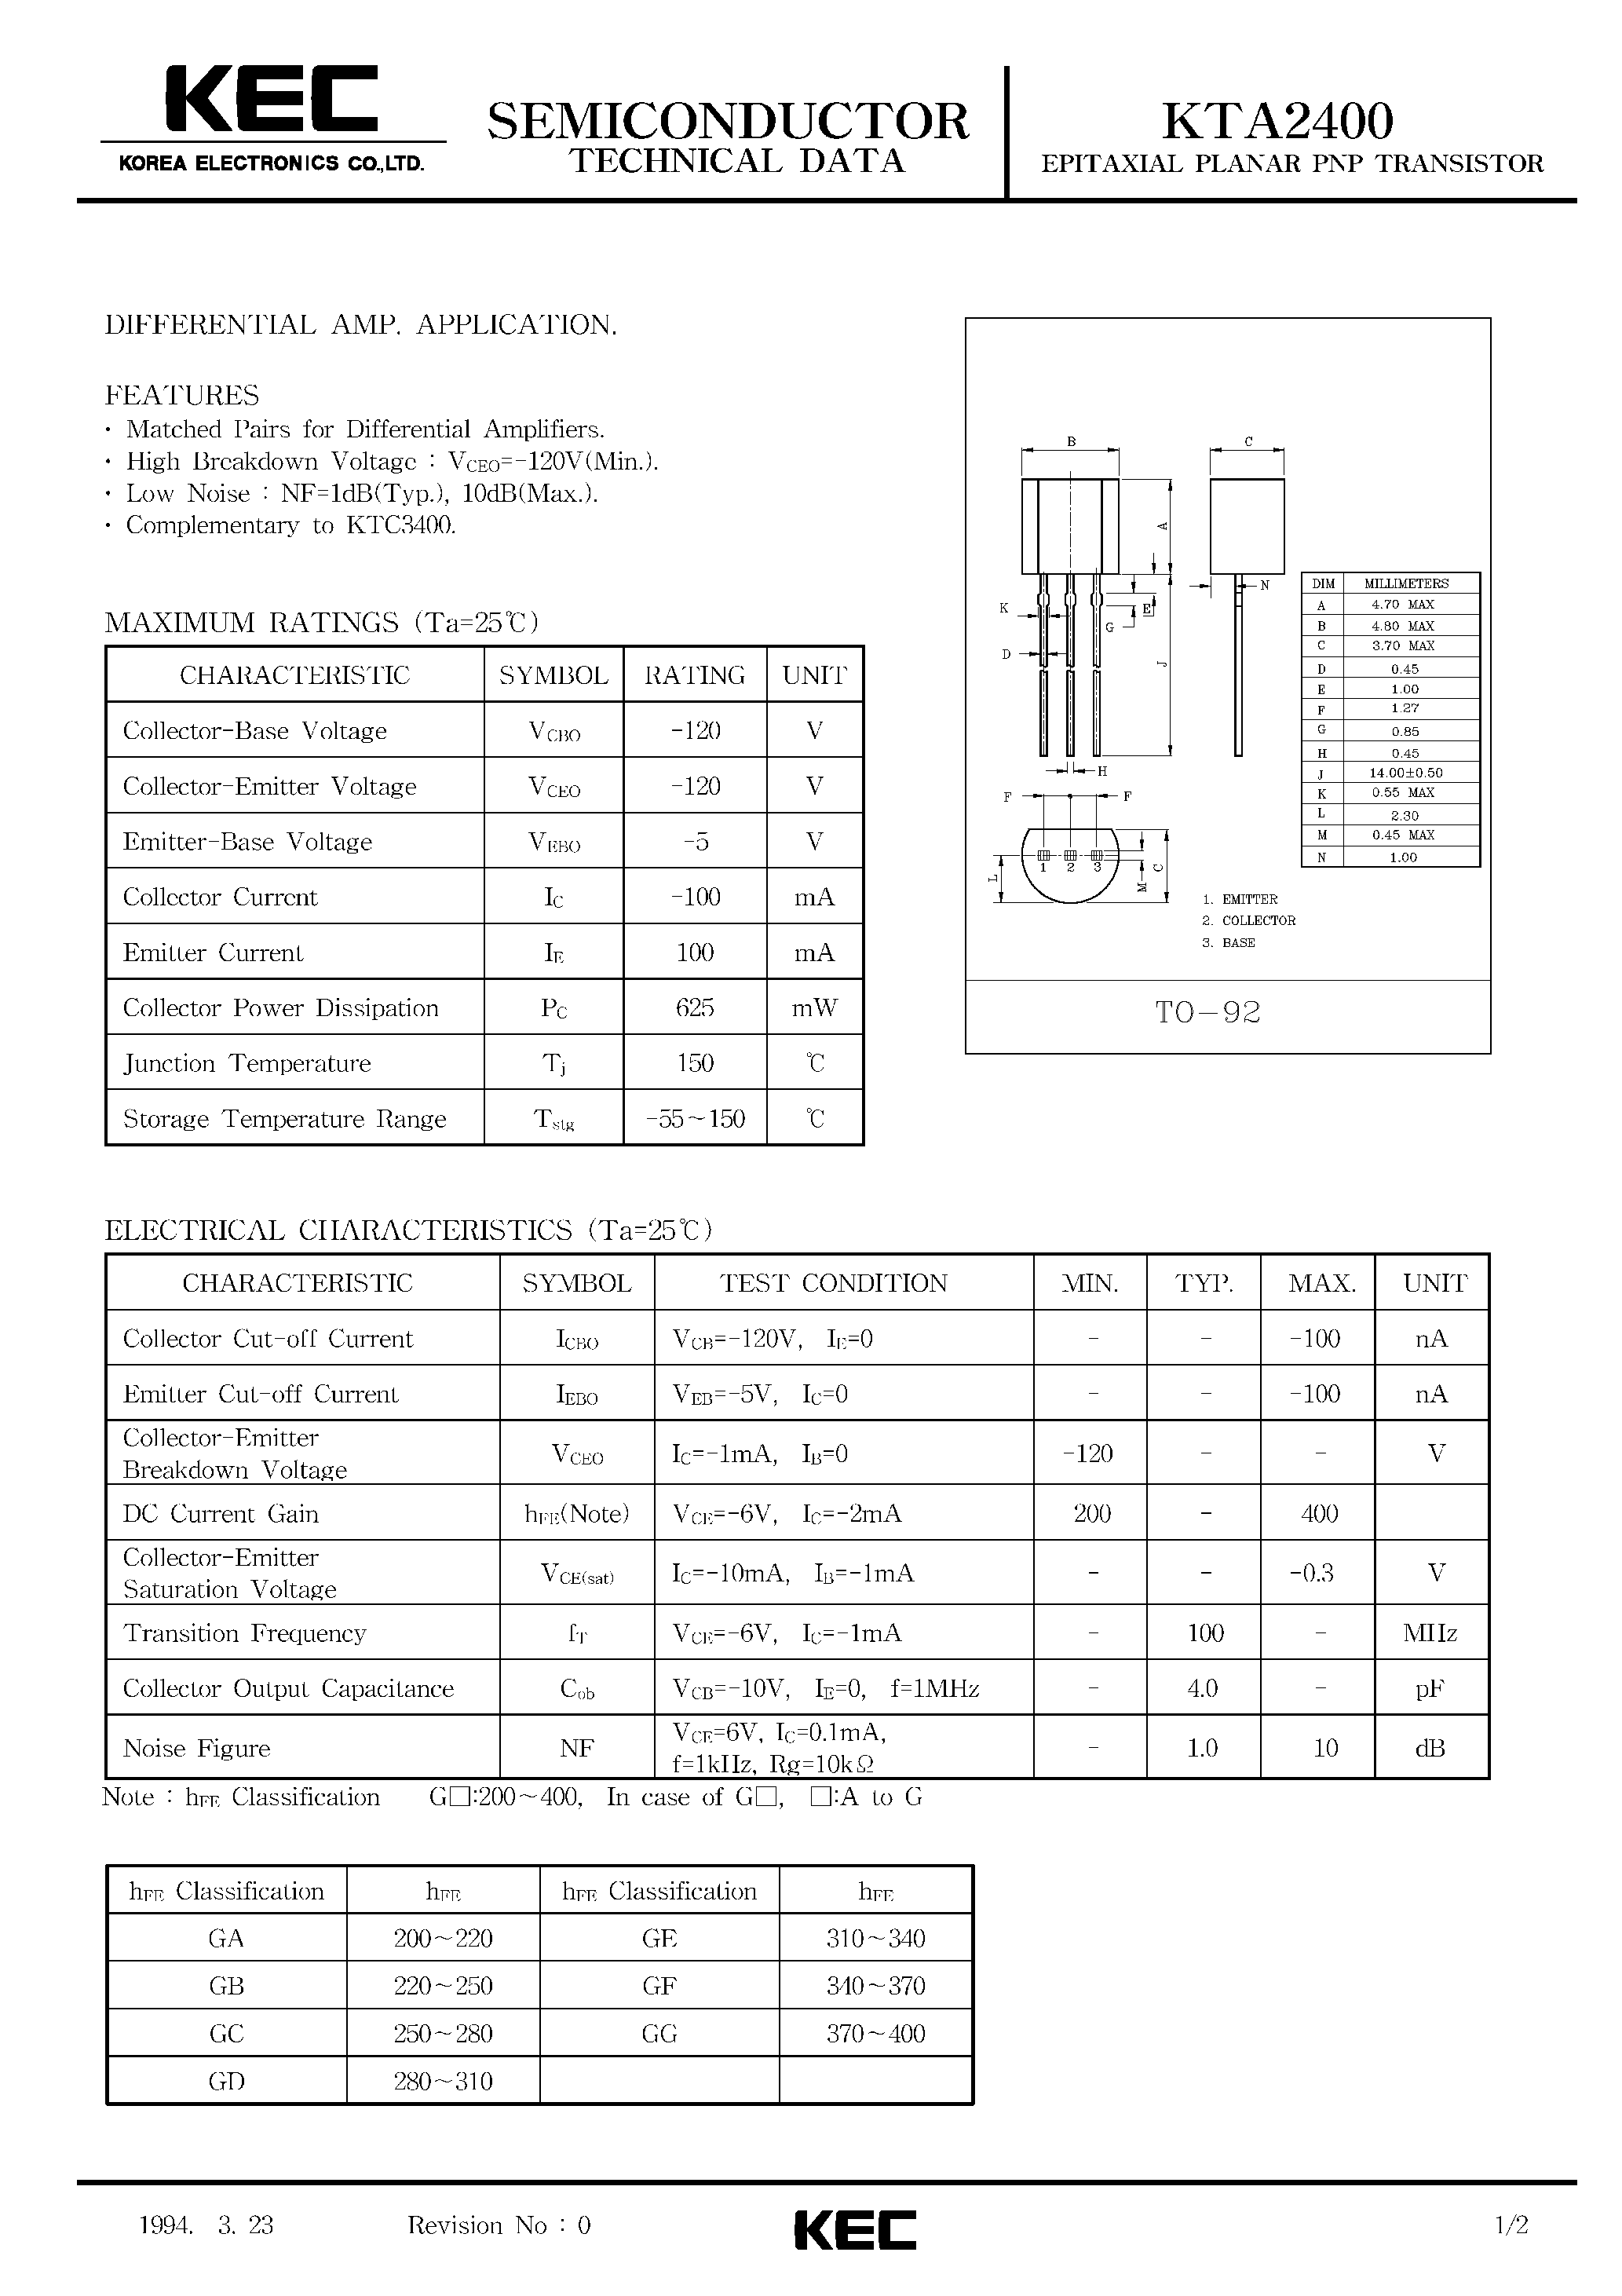 Даташит KTA2400 - EPITAXIAL PLANAR PNP TRANSISTOR (DIFFERENTIAL AMP.) страница 1